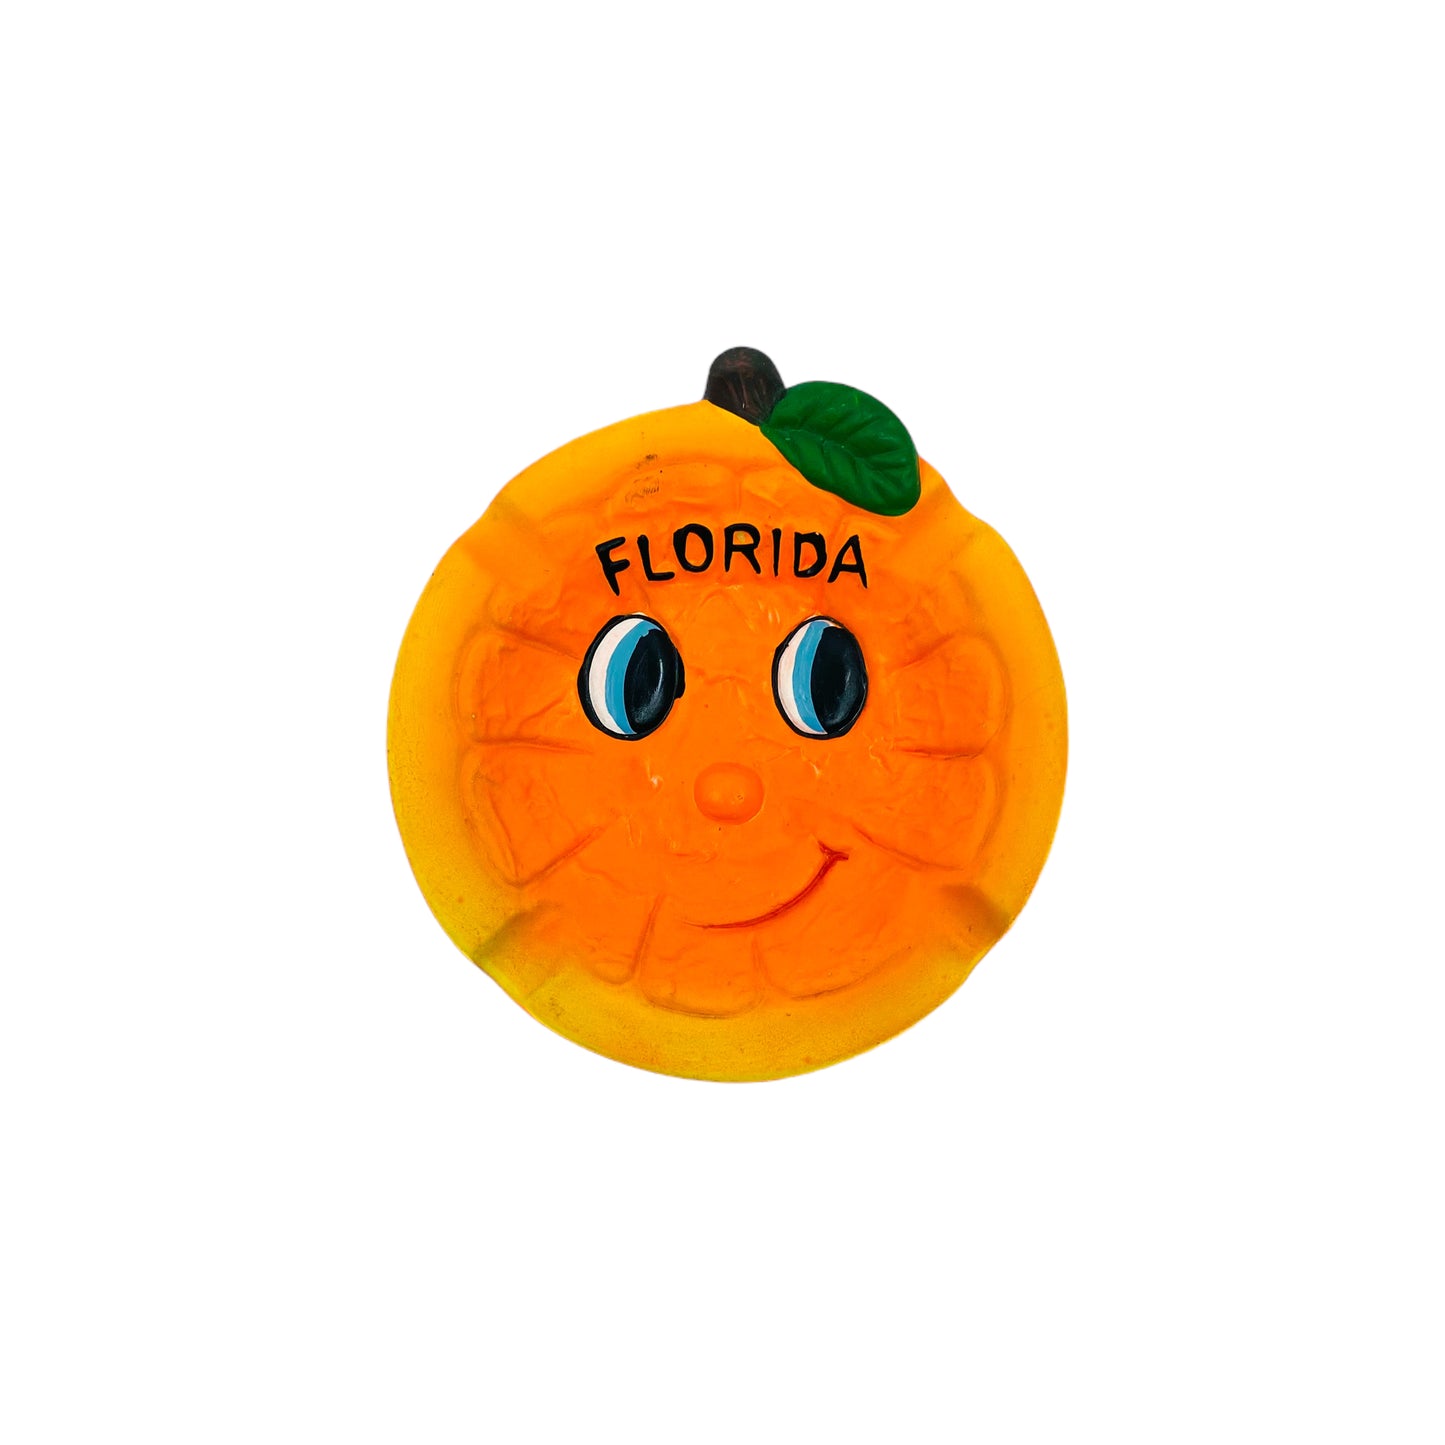 Retro Vintage Florida Orange Ashtray